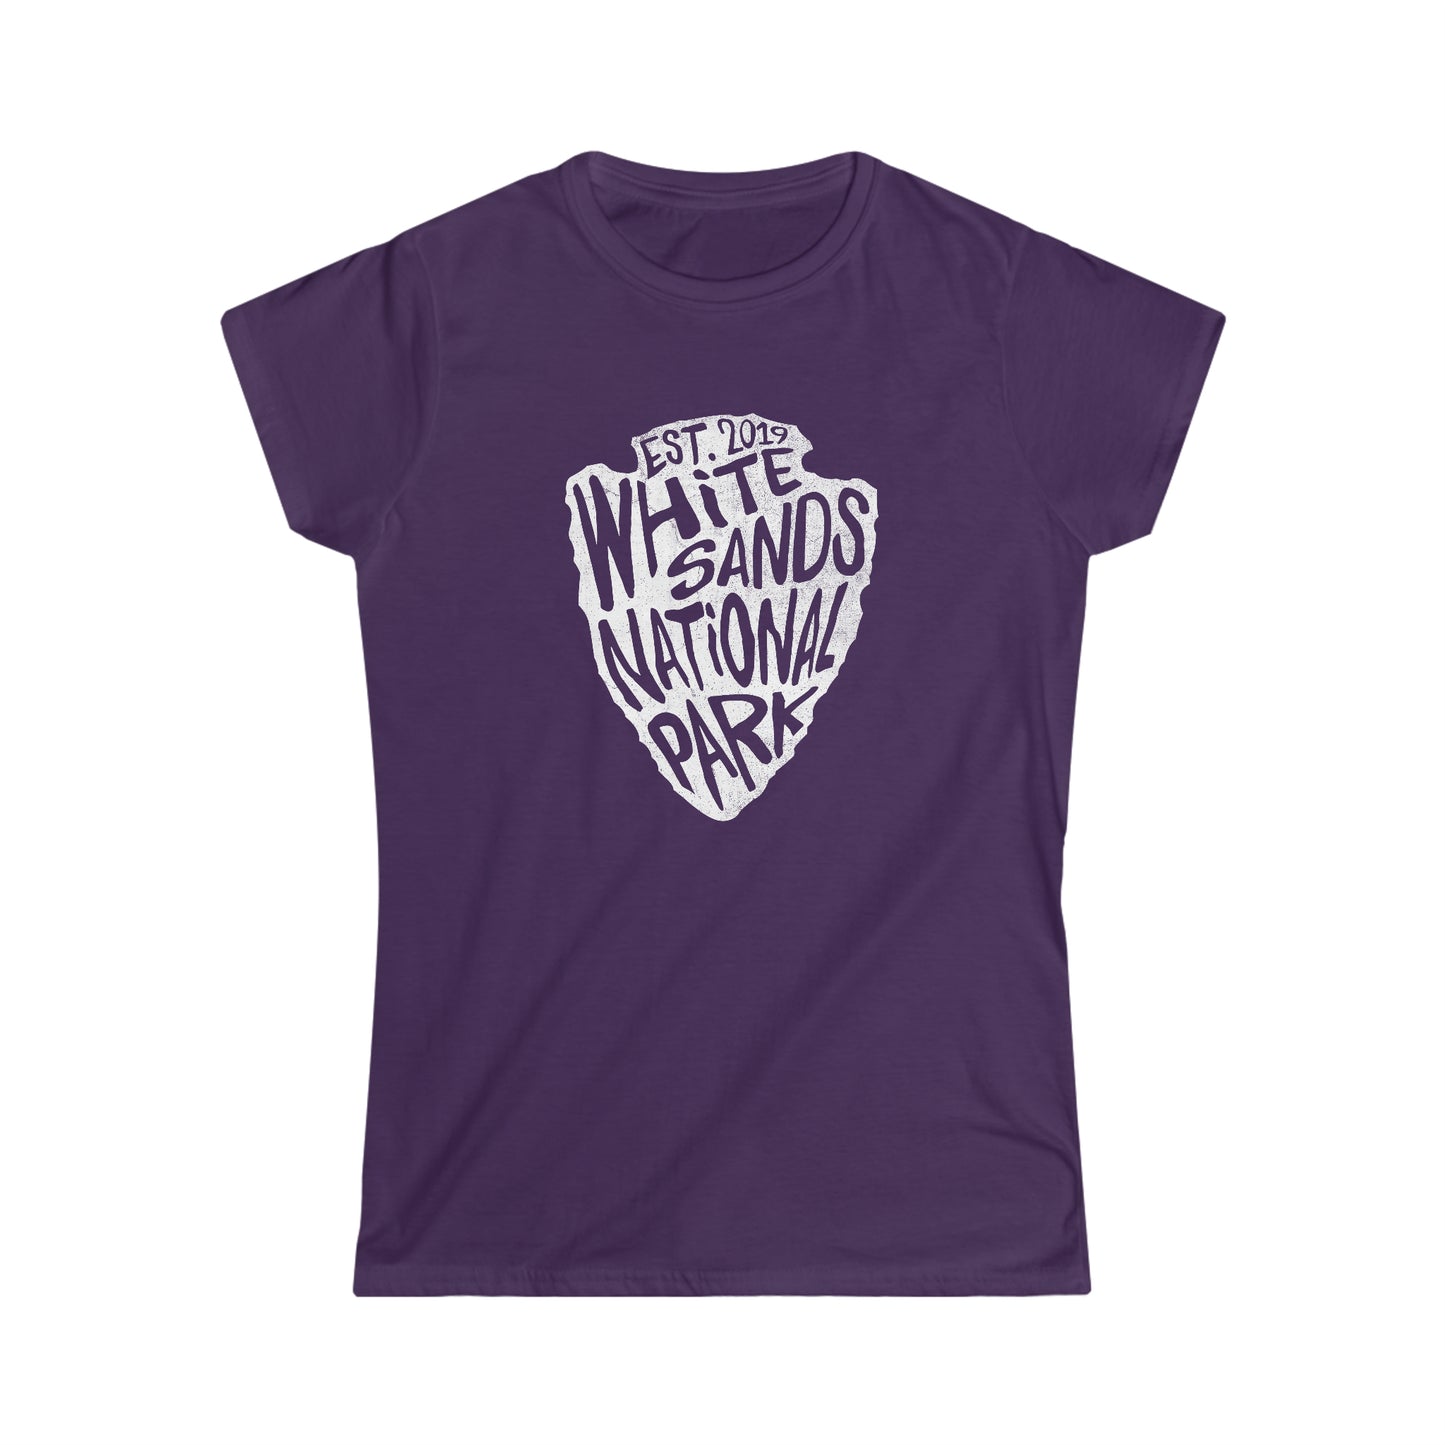 White Sands National Park Women's T-Shirt - Arrowhead Design